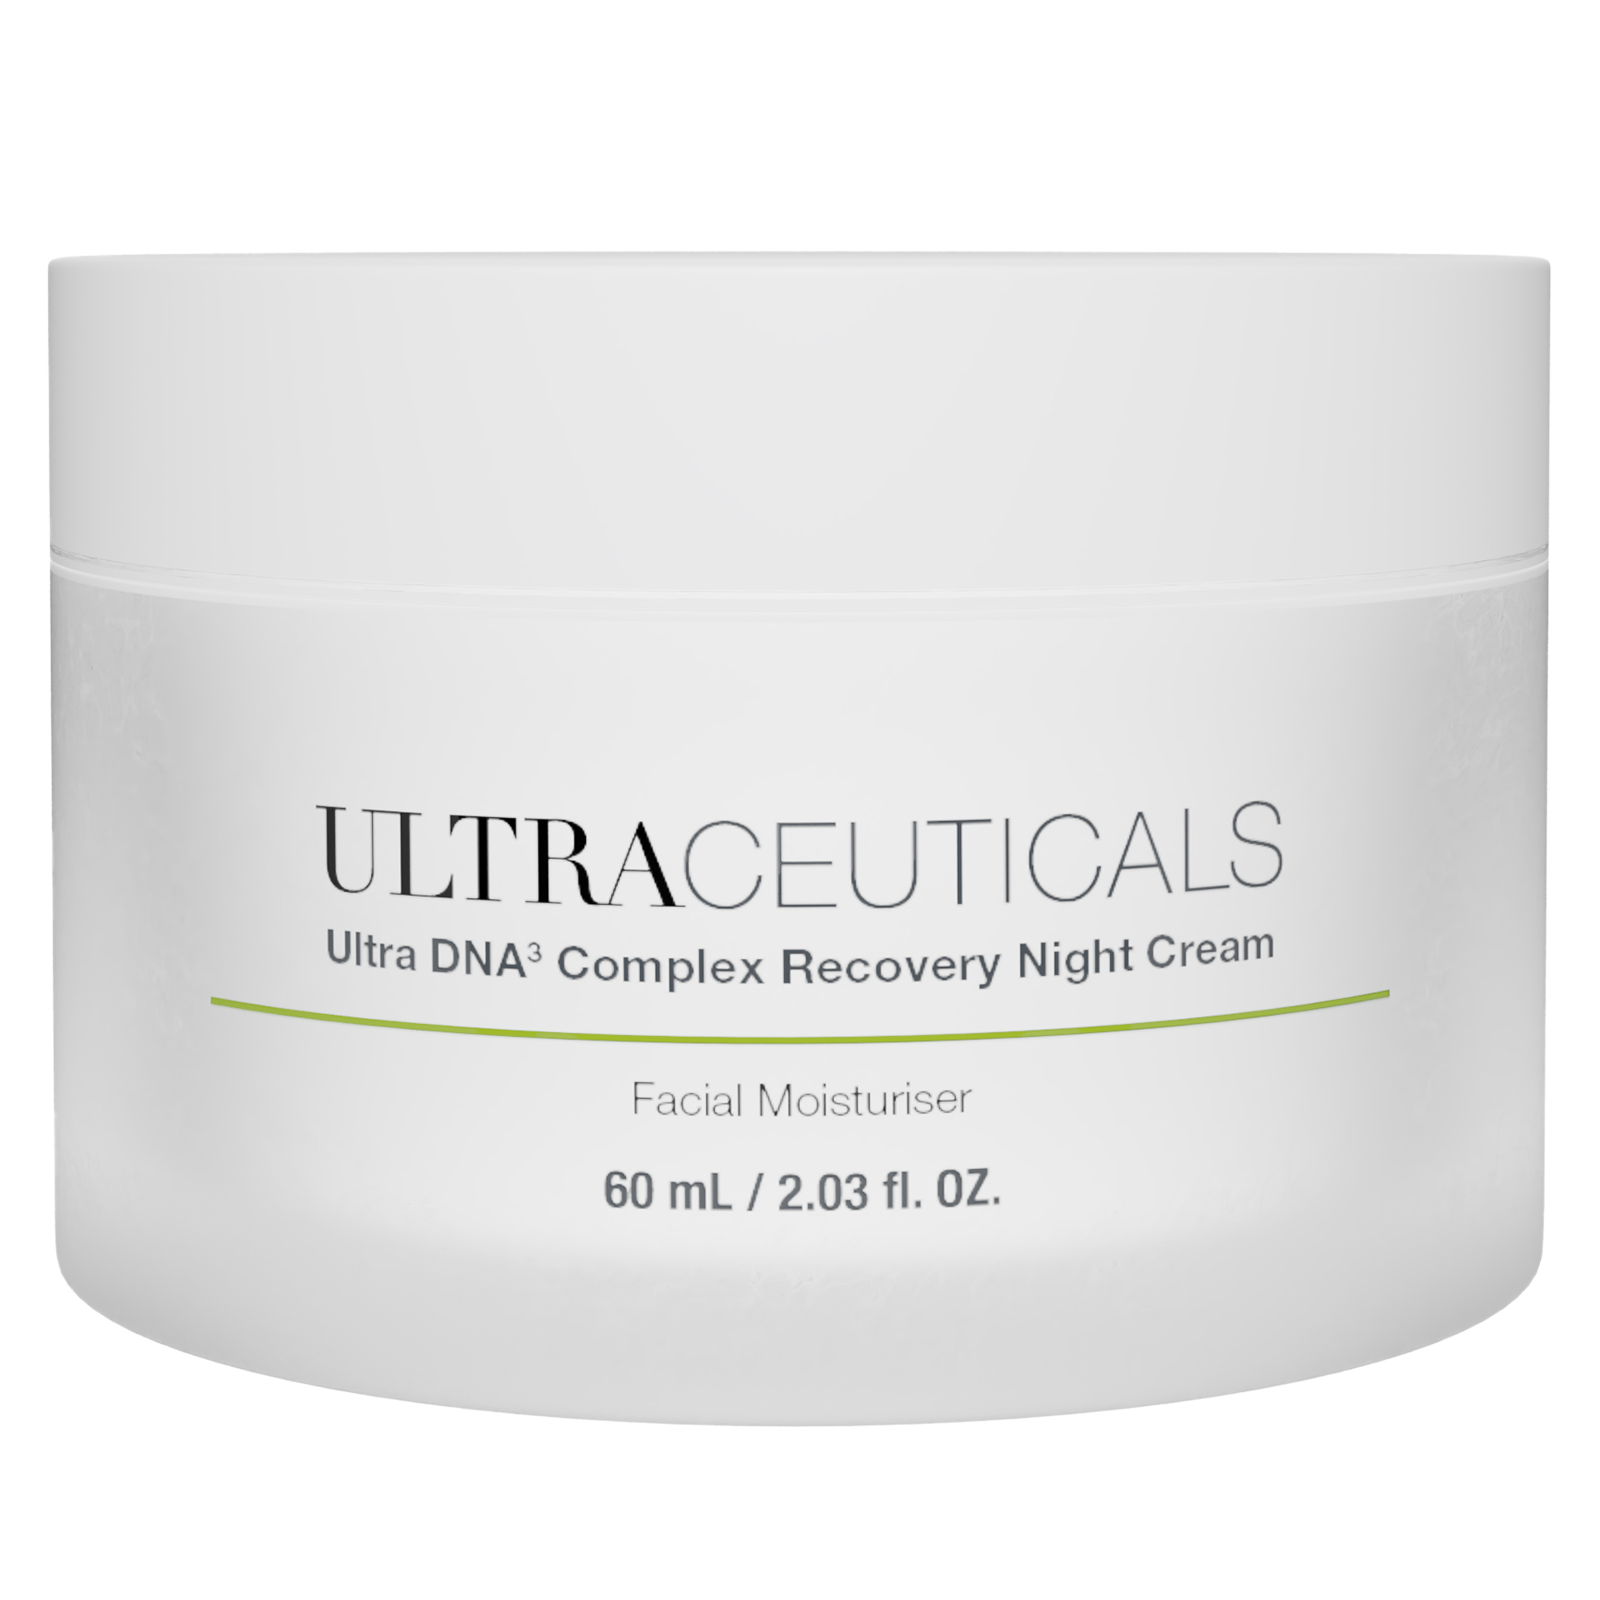 Ultra DNA³ Complex Recovery Night Cream